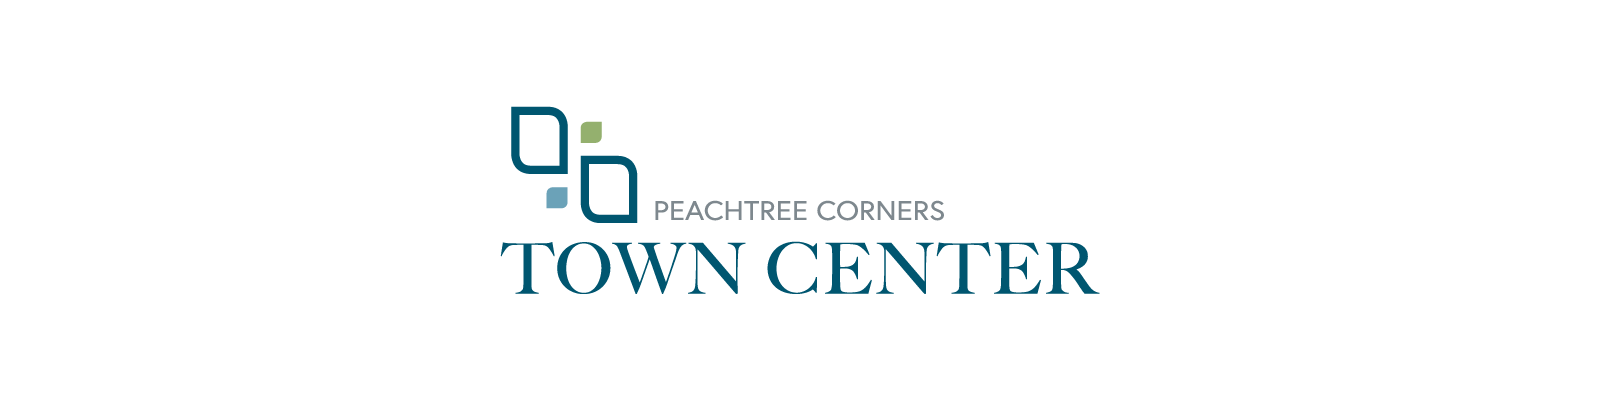 Peachtree Corners Town Center | Logo Design by Clementine Creative Agency | Atlanta, GA